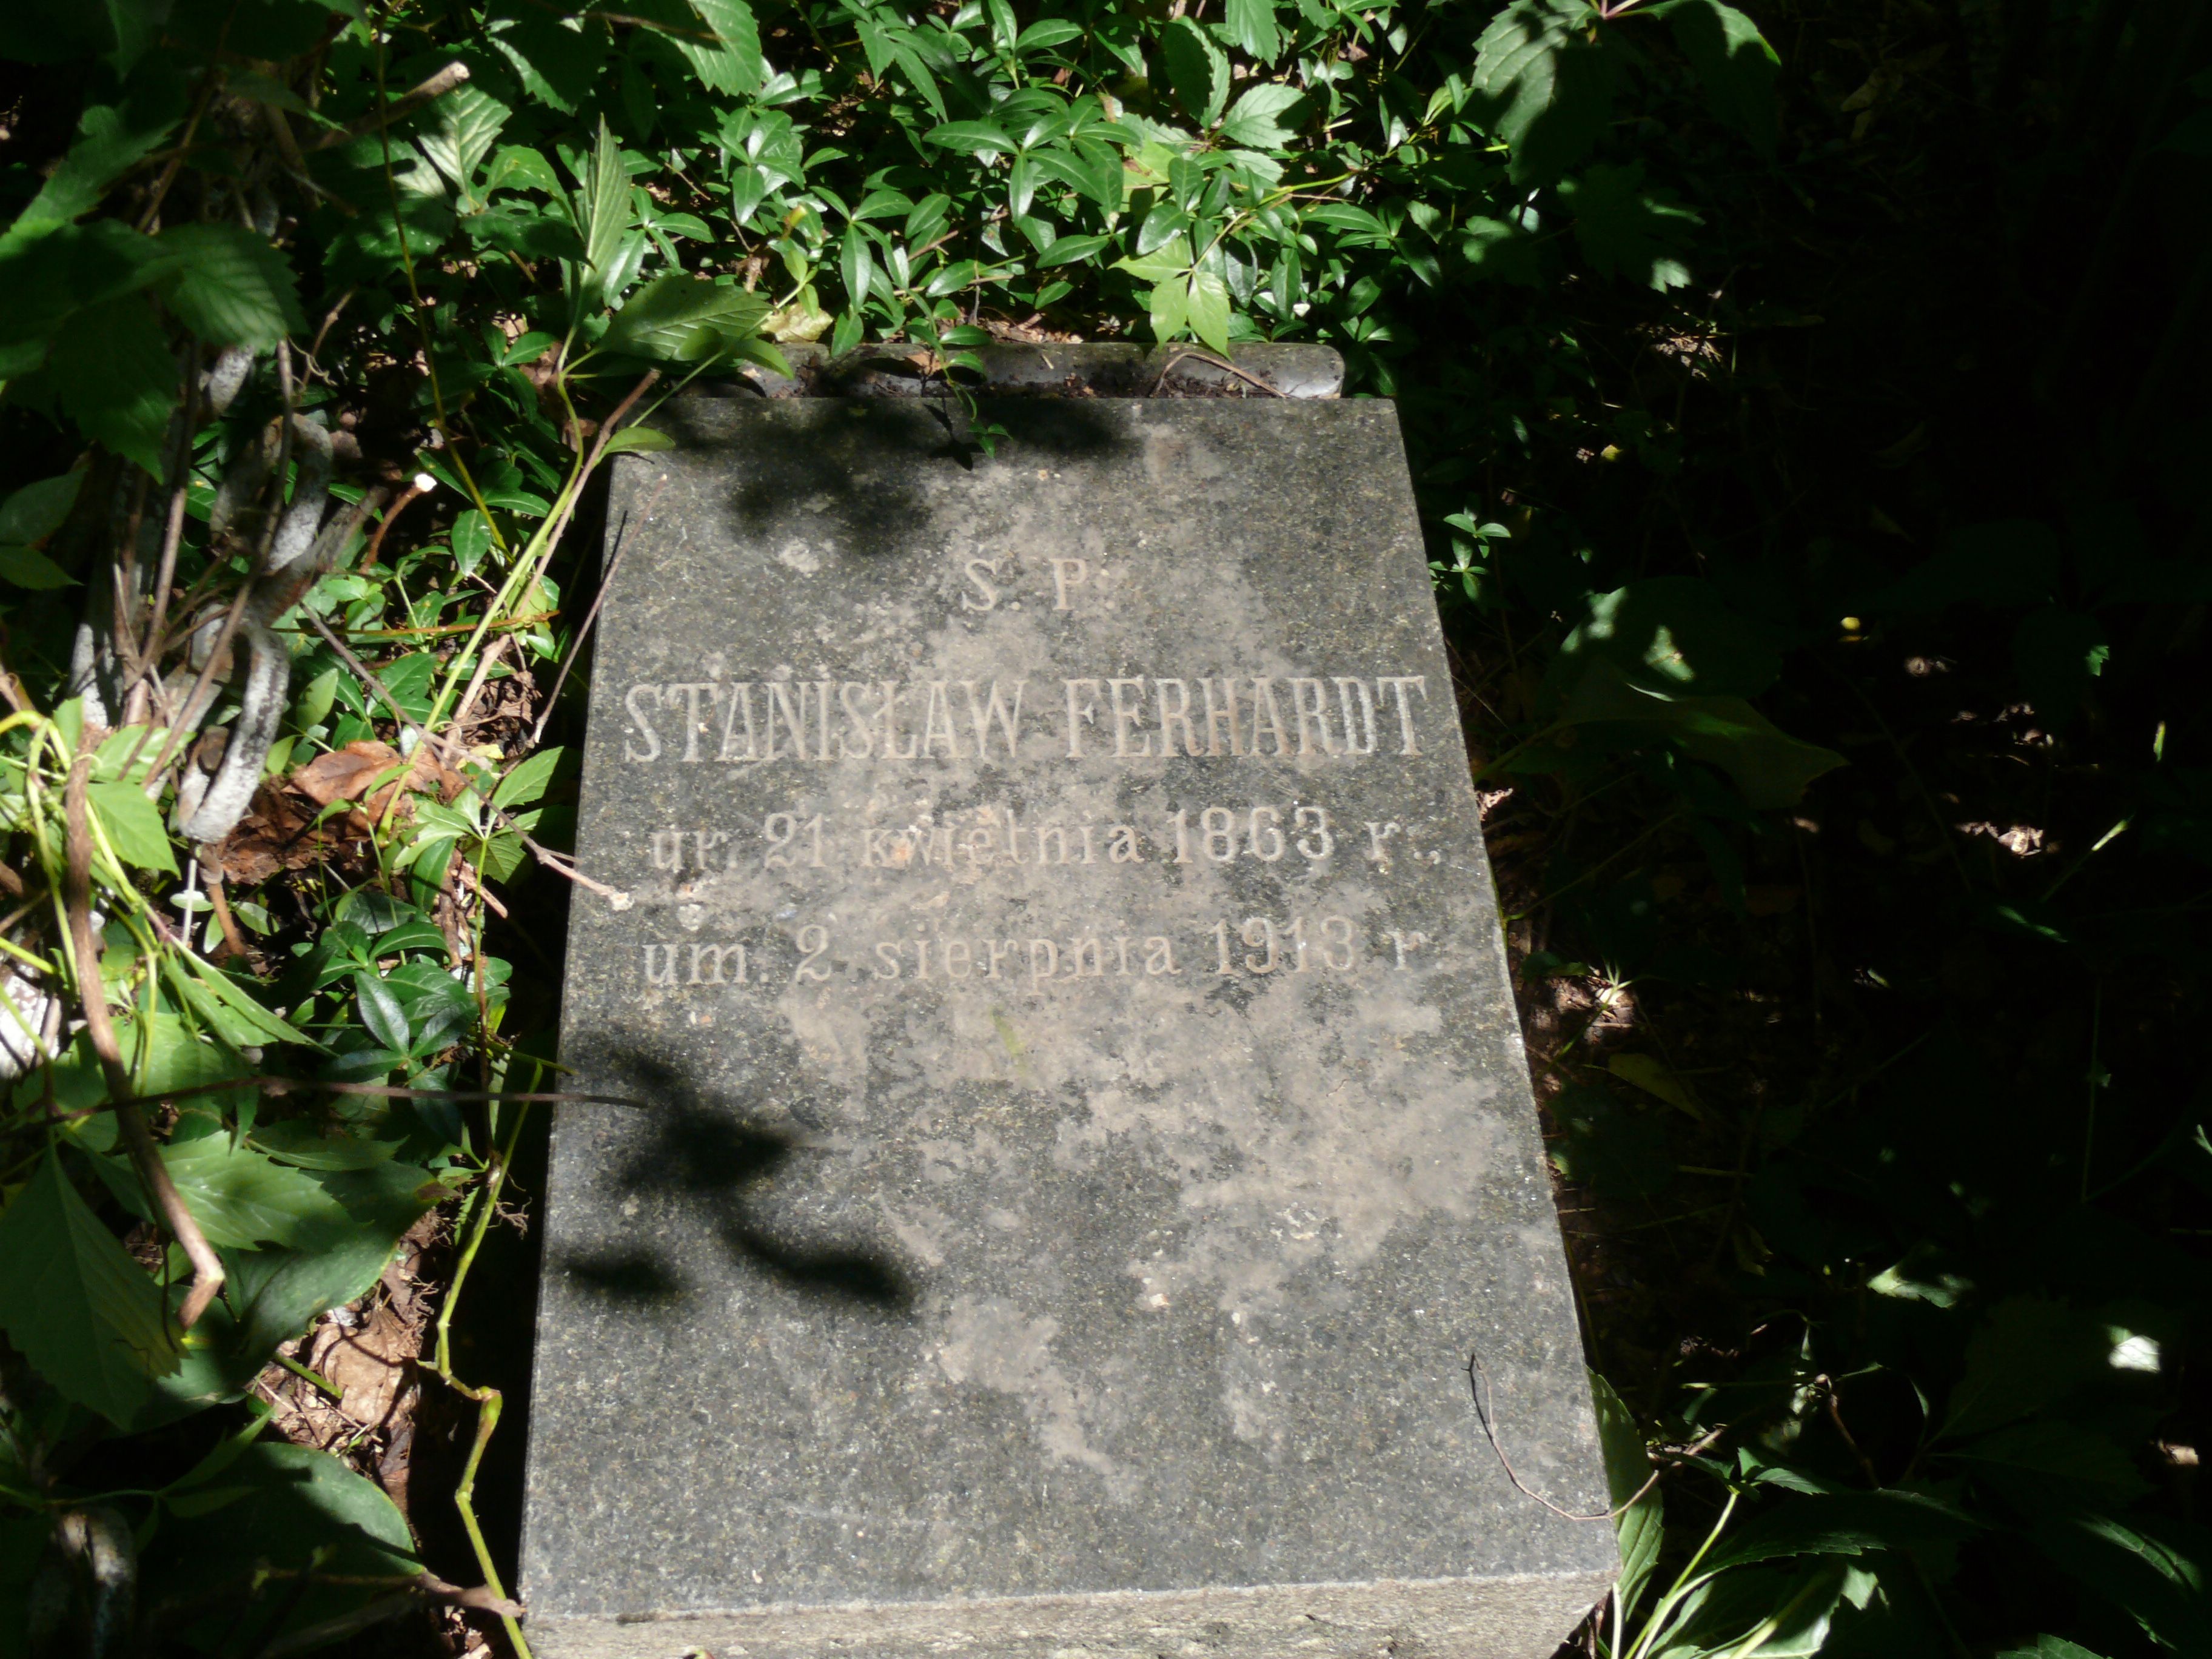 Tombstone of Stanislav Ferhardt, Bajkova cemetery, Kiev, 2021